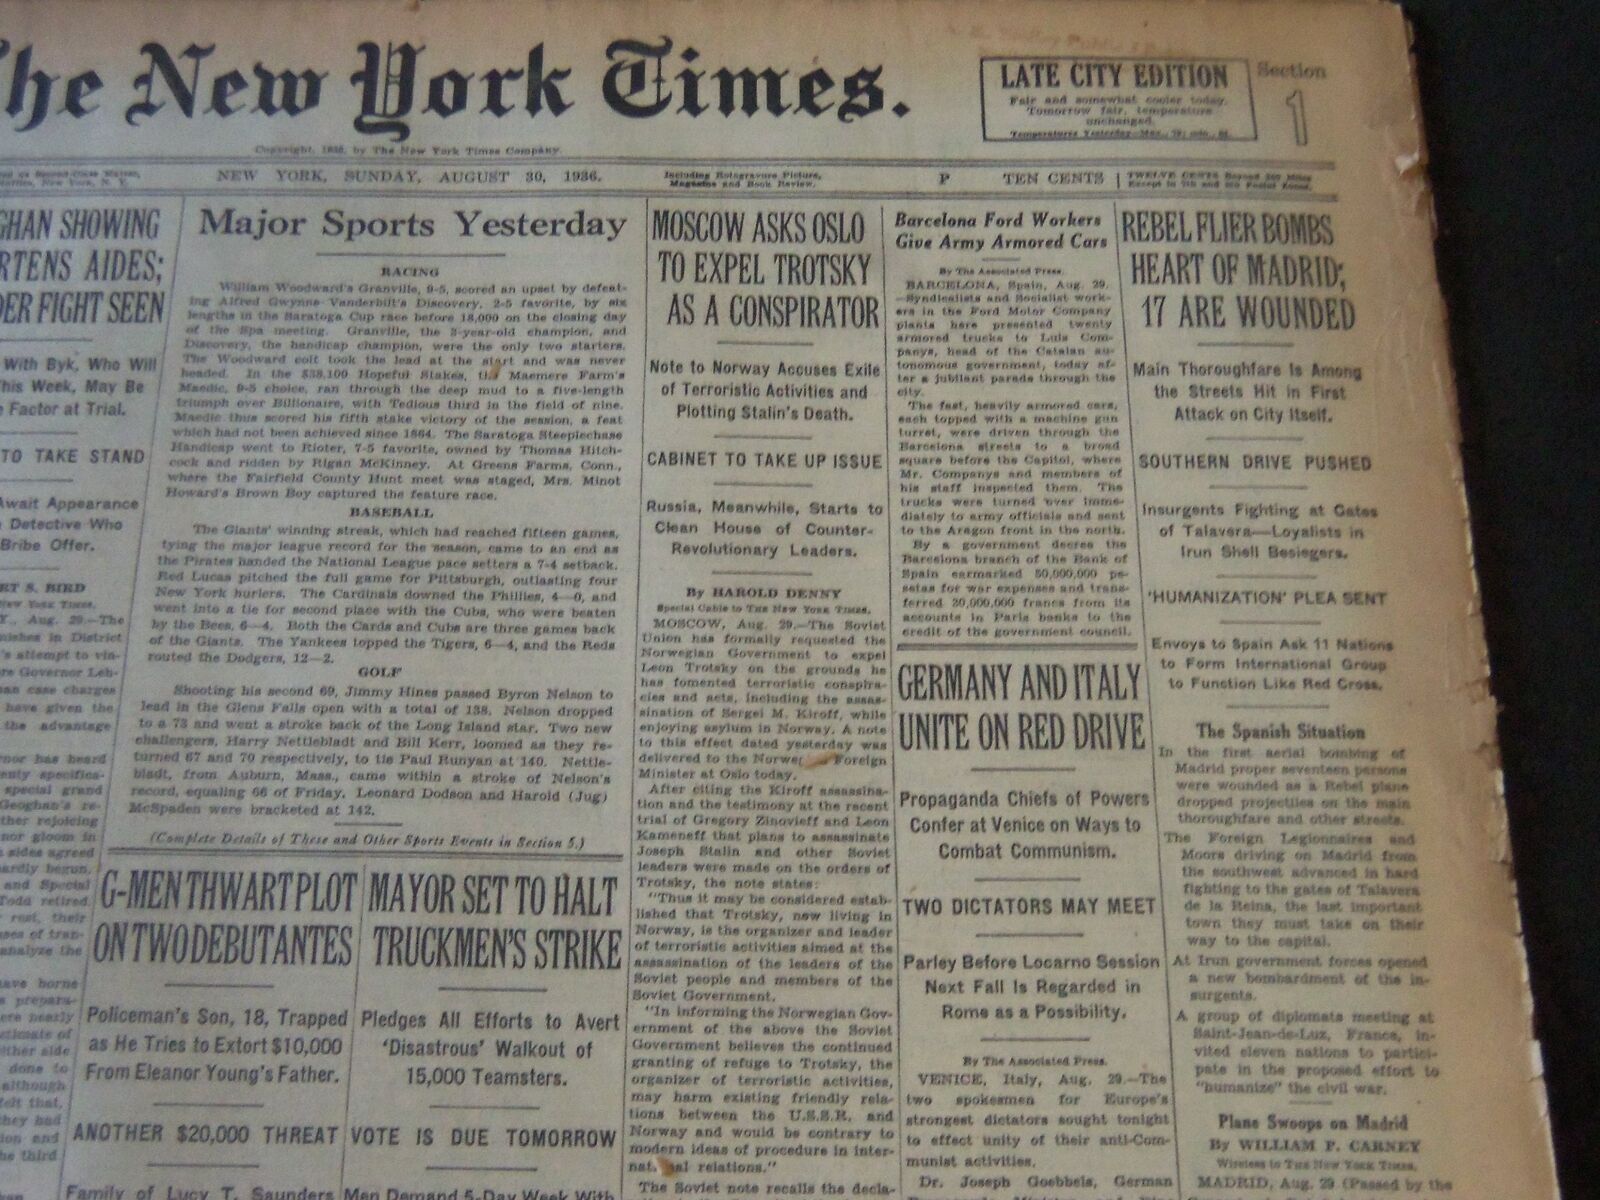 1936 AUGUST 30 NEW YORK TIMES - REBEL FLIER BOMBS HEART OF MADRID - NT 6718